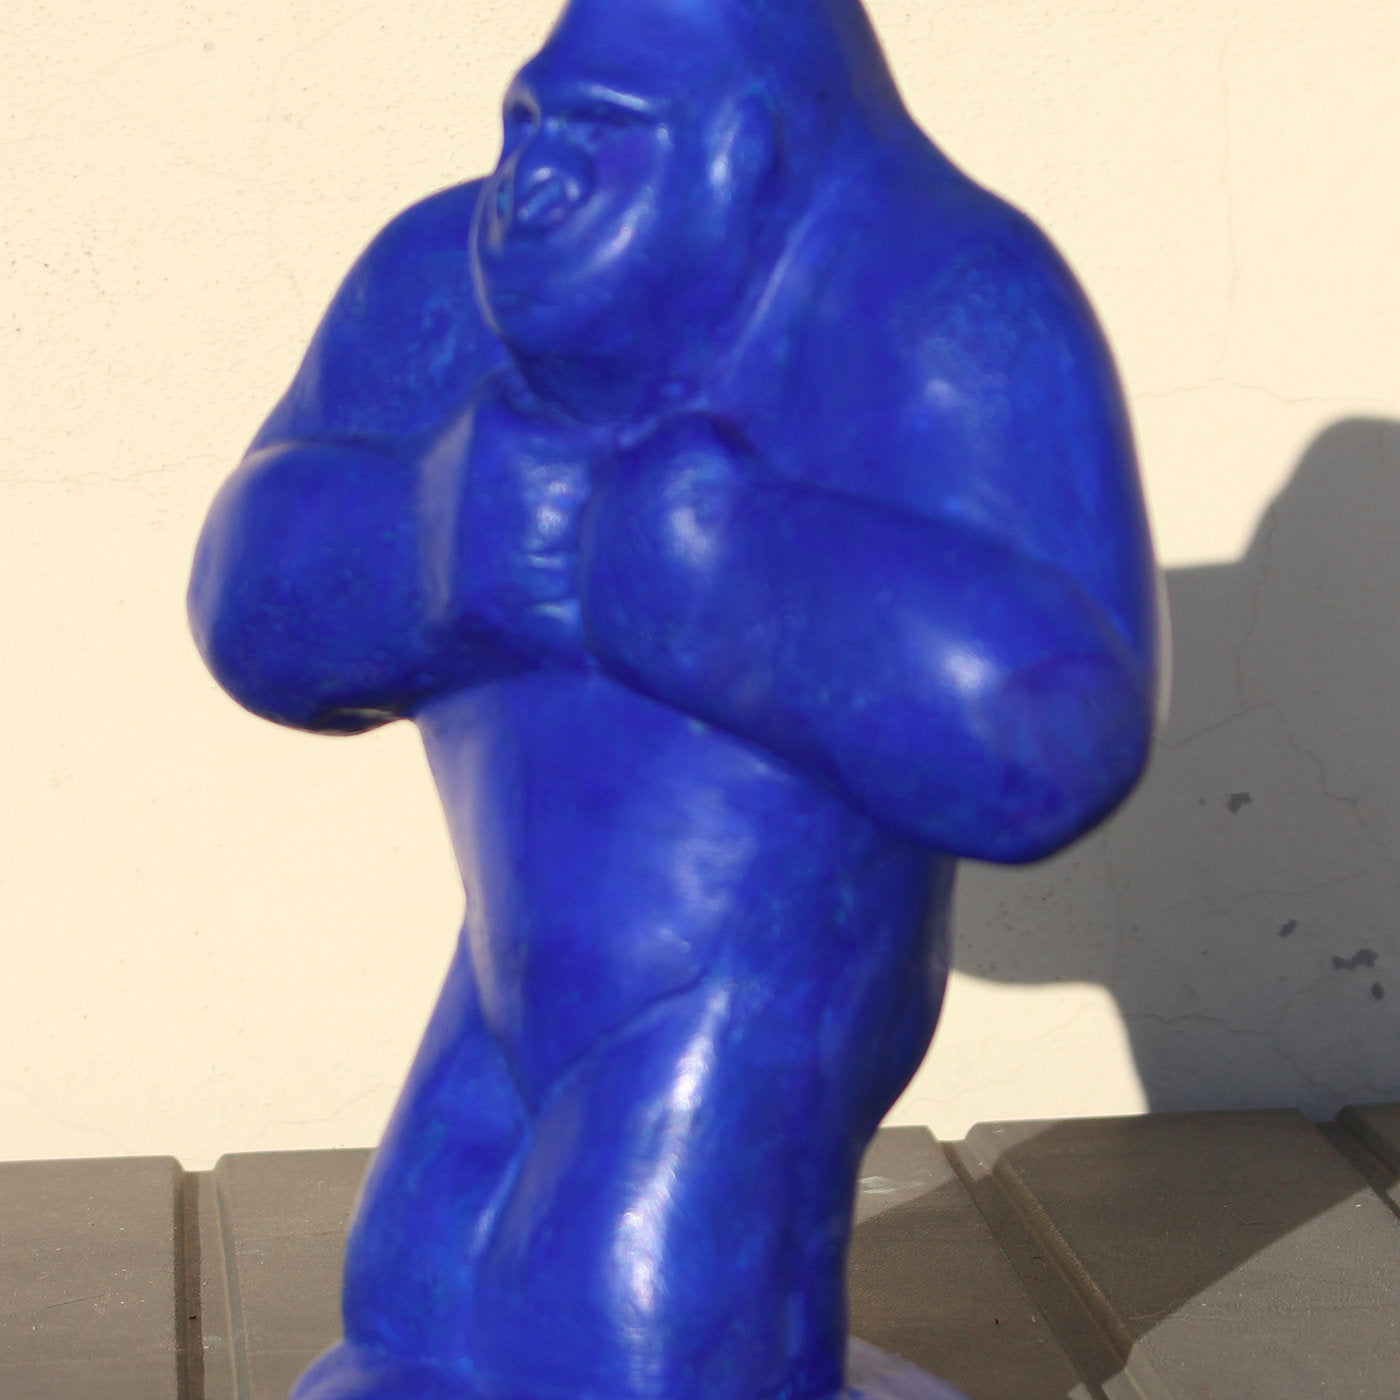 Electric Blue Gorilla Sculpture - Alternative view 1